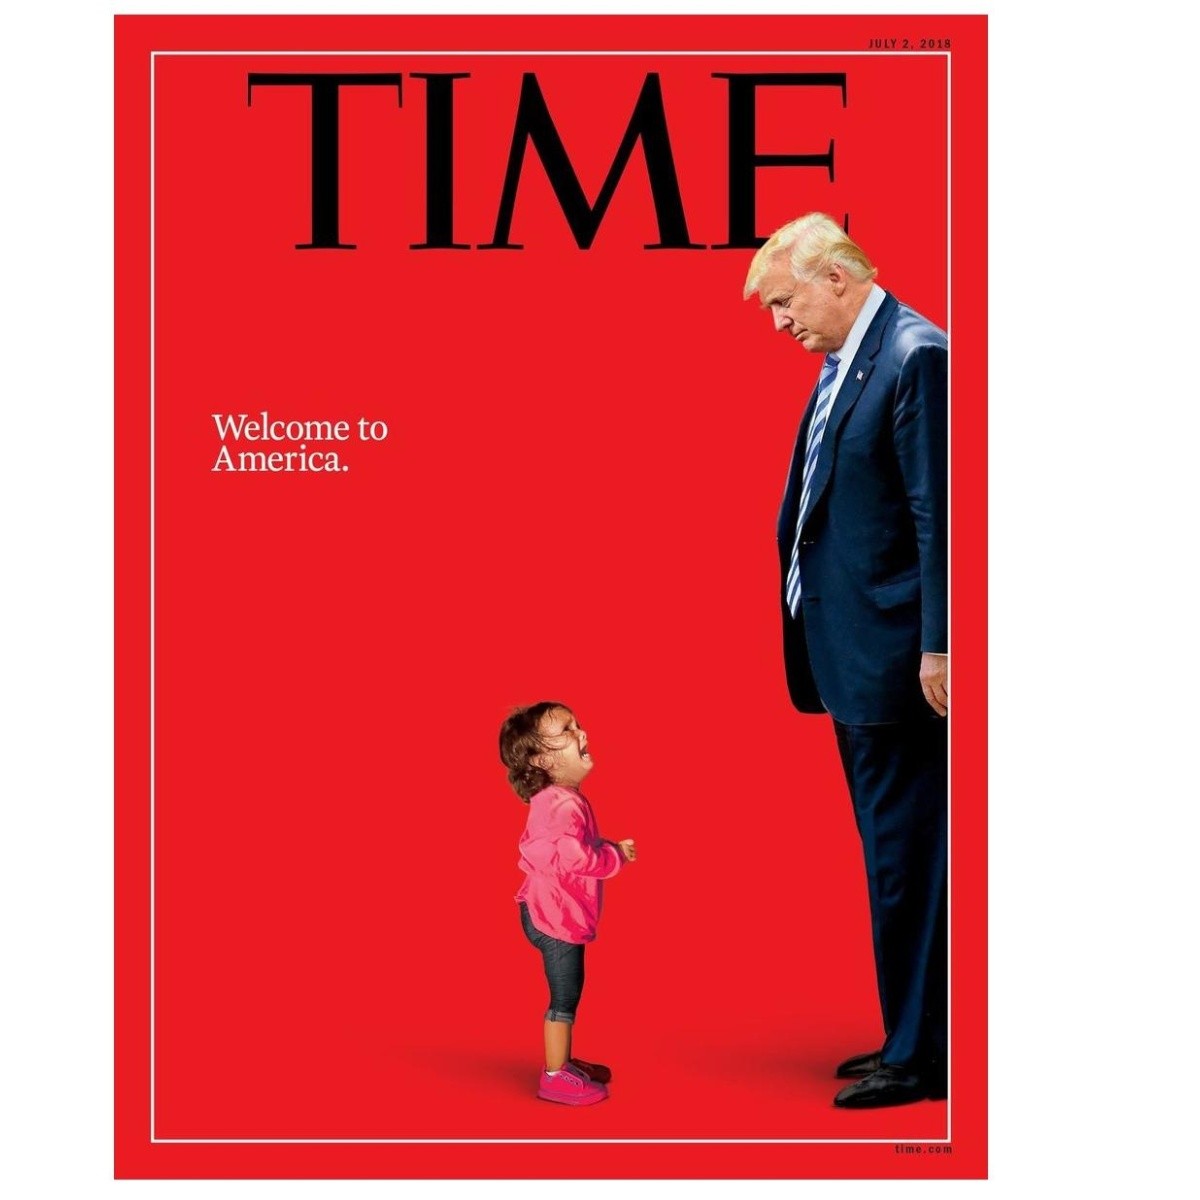 Trump &amp;#39;&amp;#39;se enfrenta&amp;#39;&amp;#39; a niña migrante en portada de la revista Time | El Informador